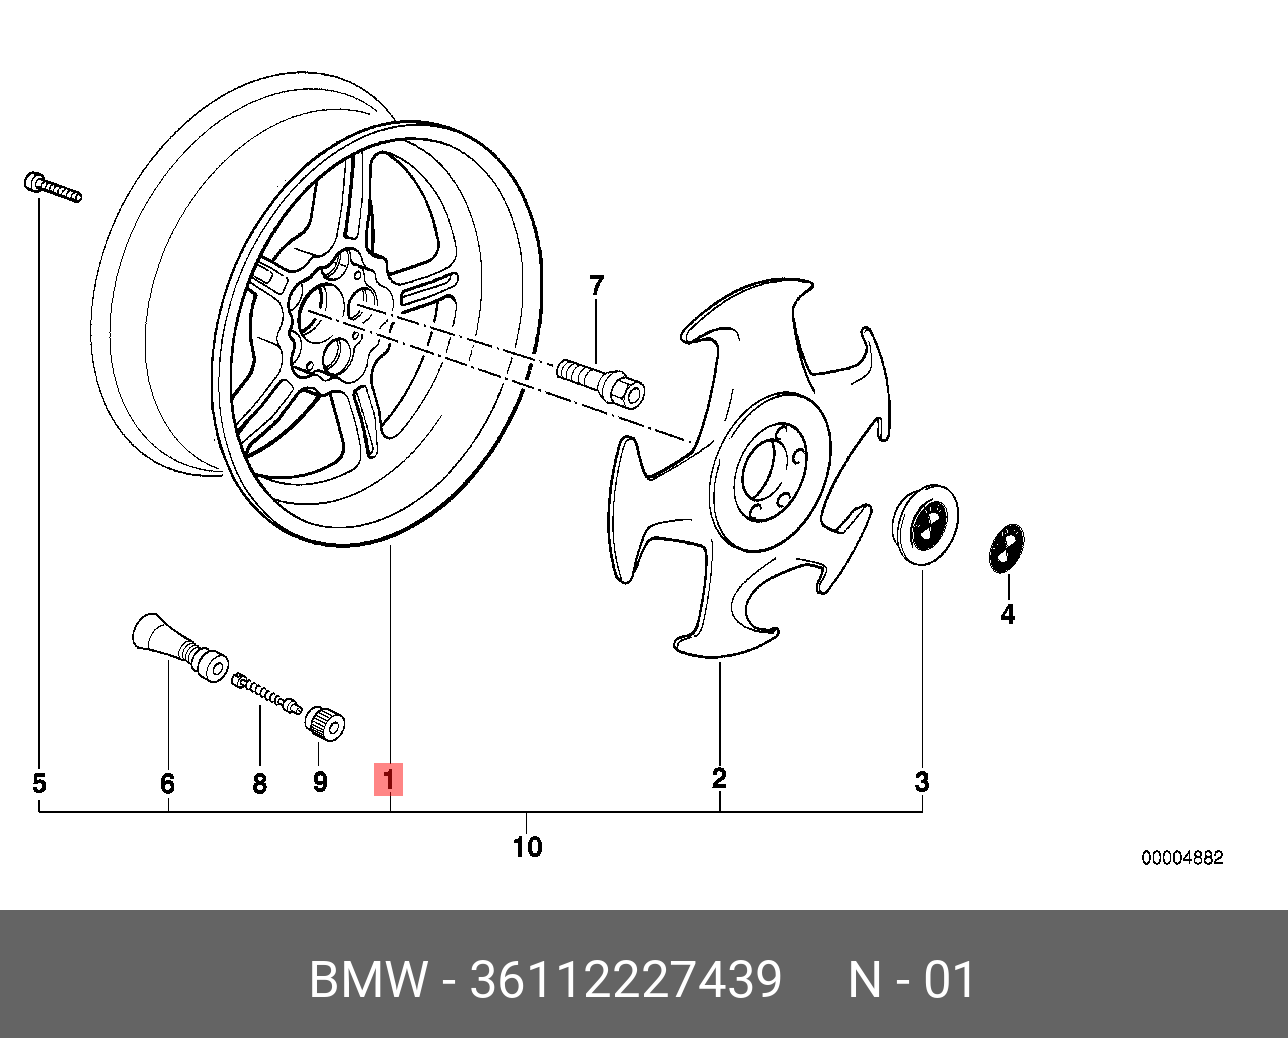 1 36 21 12. M System 1 BMW. BMW 23 12 1 224 775. Gj6e-34-012. Размер внутри колпак БМВ 525 1994 года фото.